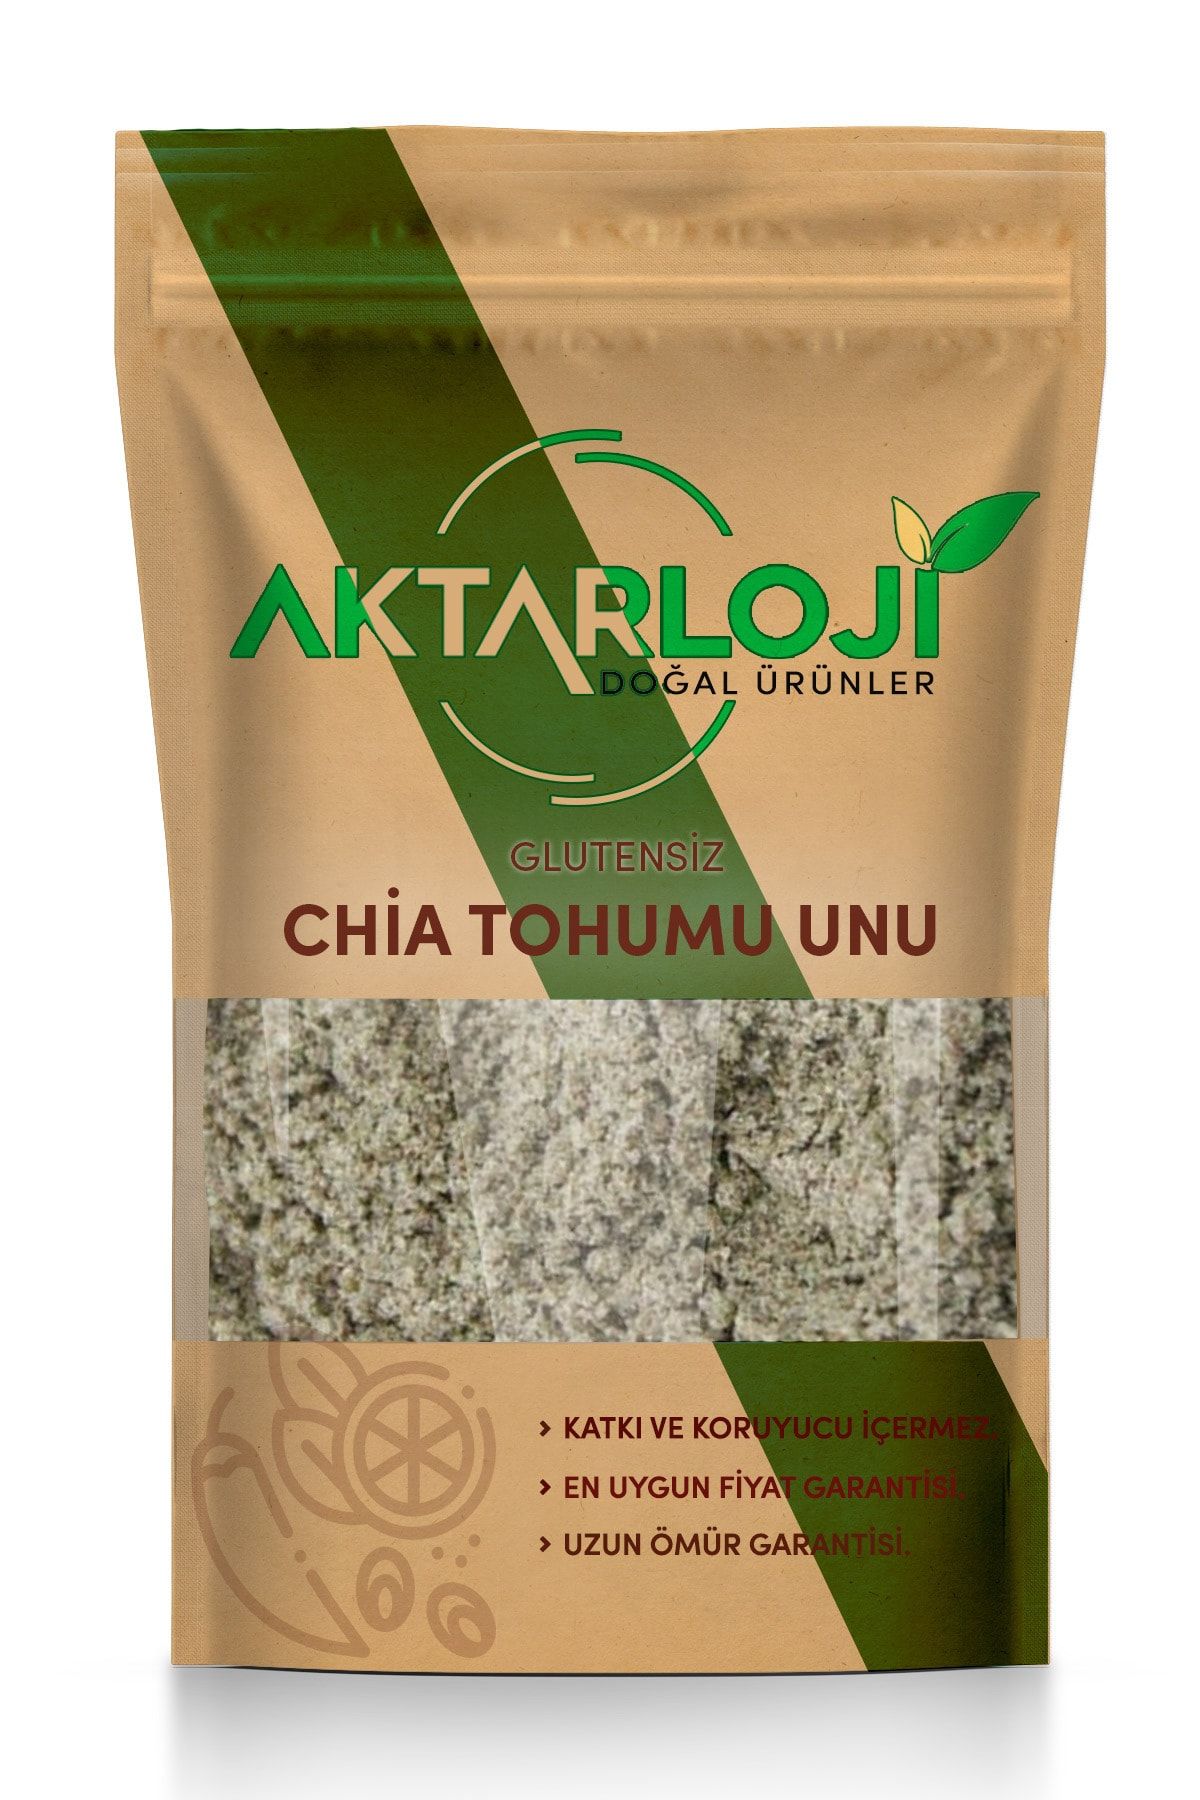 aktarloji 1 kg Glutensiz Chia Tohumu Unu